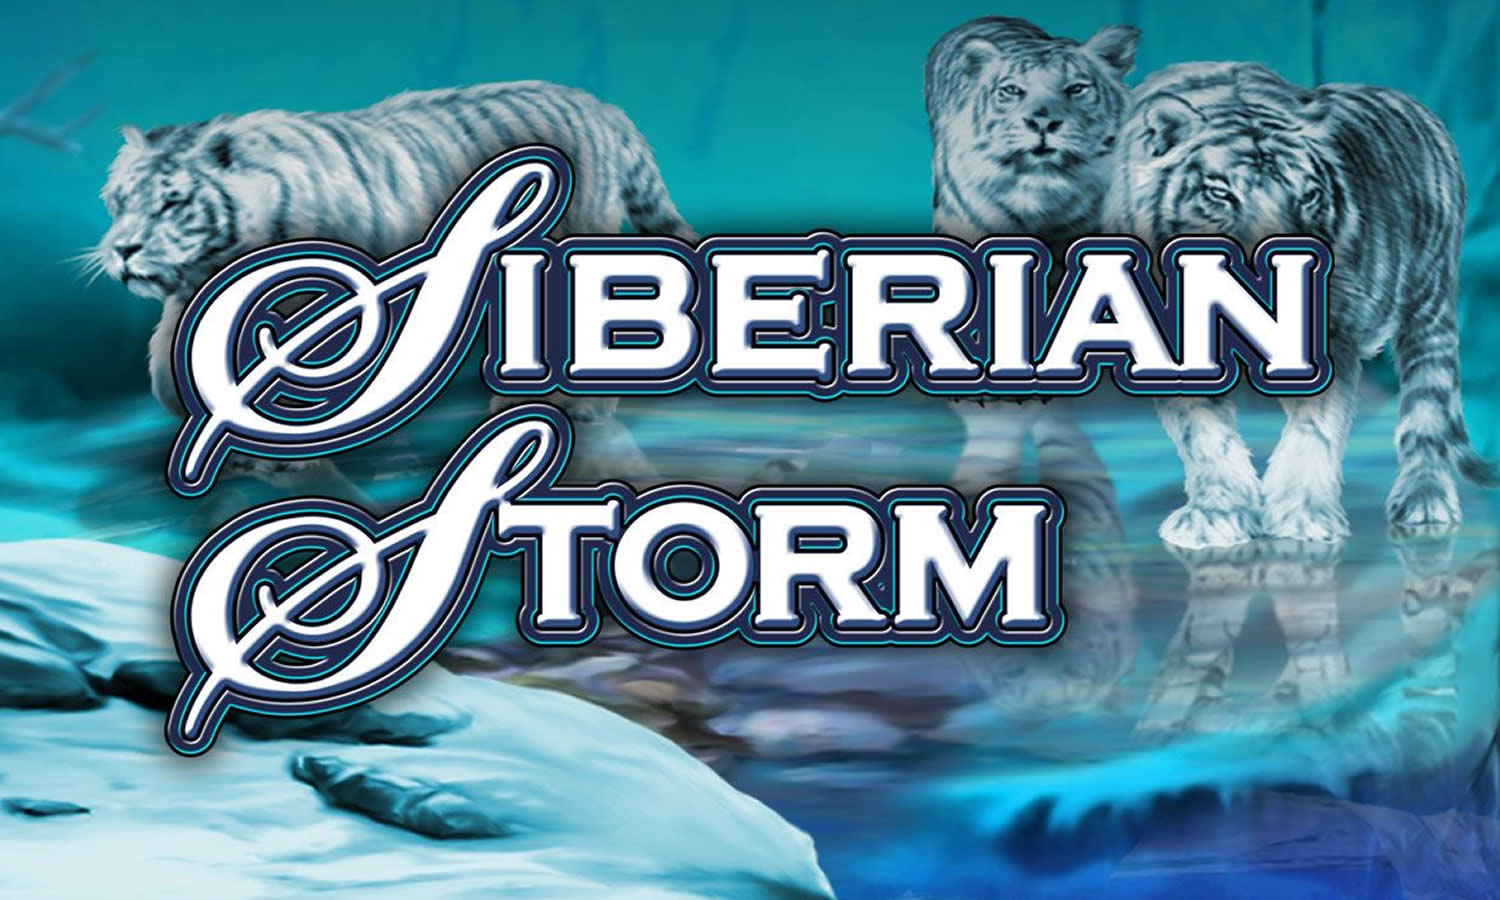 Siberian Storm Slot Review